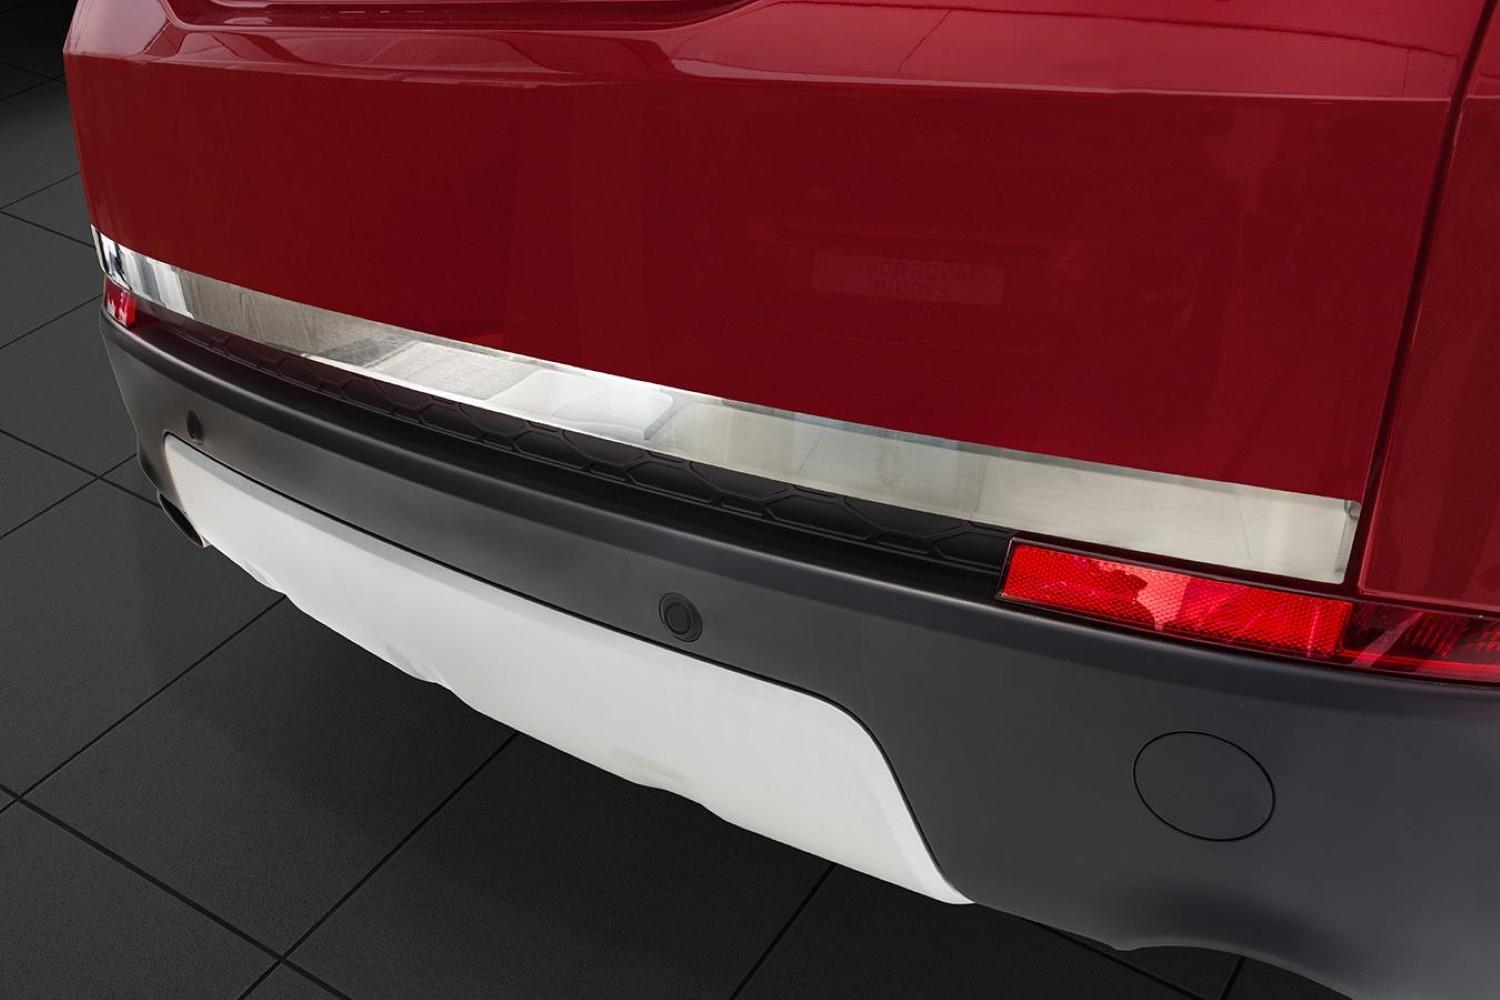  Voiture Cuir Tapis de Coffre pour Land Rover Discovery  Sport(7seats) 2016-2021,Cuir Anti Rayures Coffre Doublure Imperméable  Antidérapant Protection Coffre,Allblack